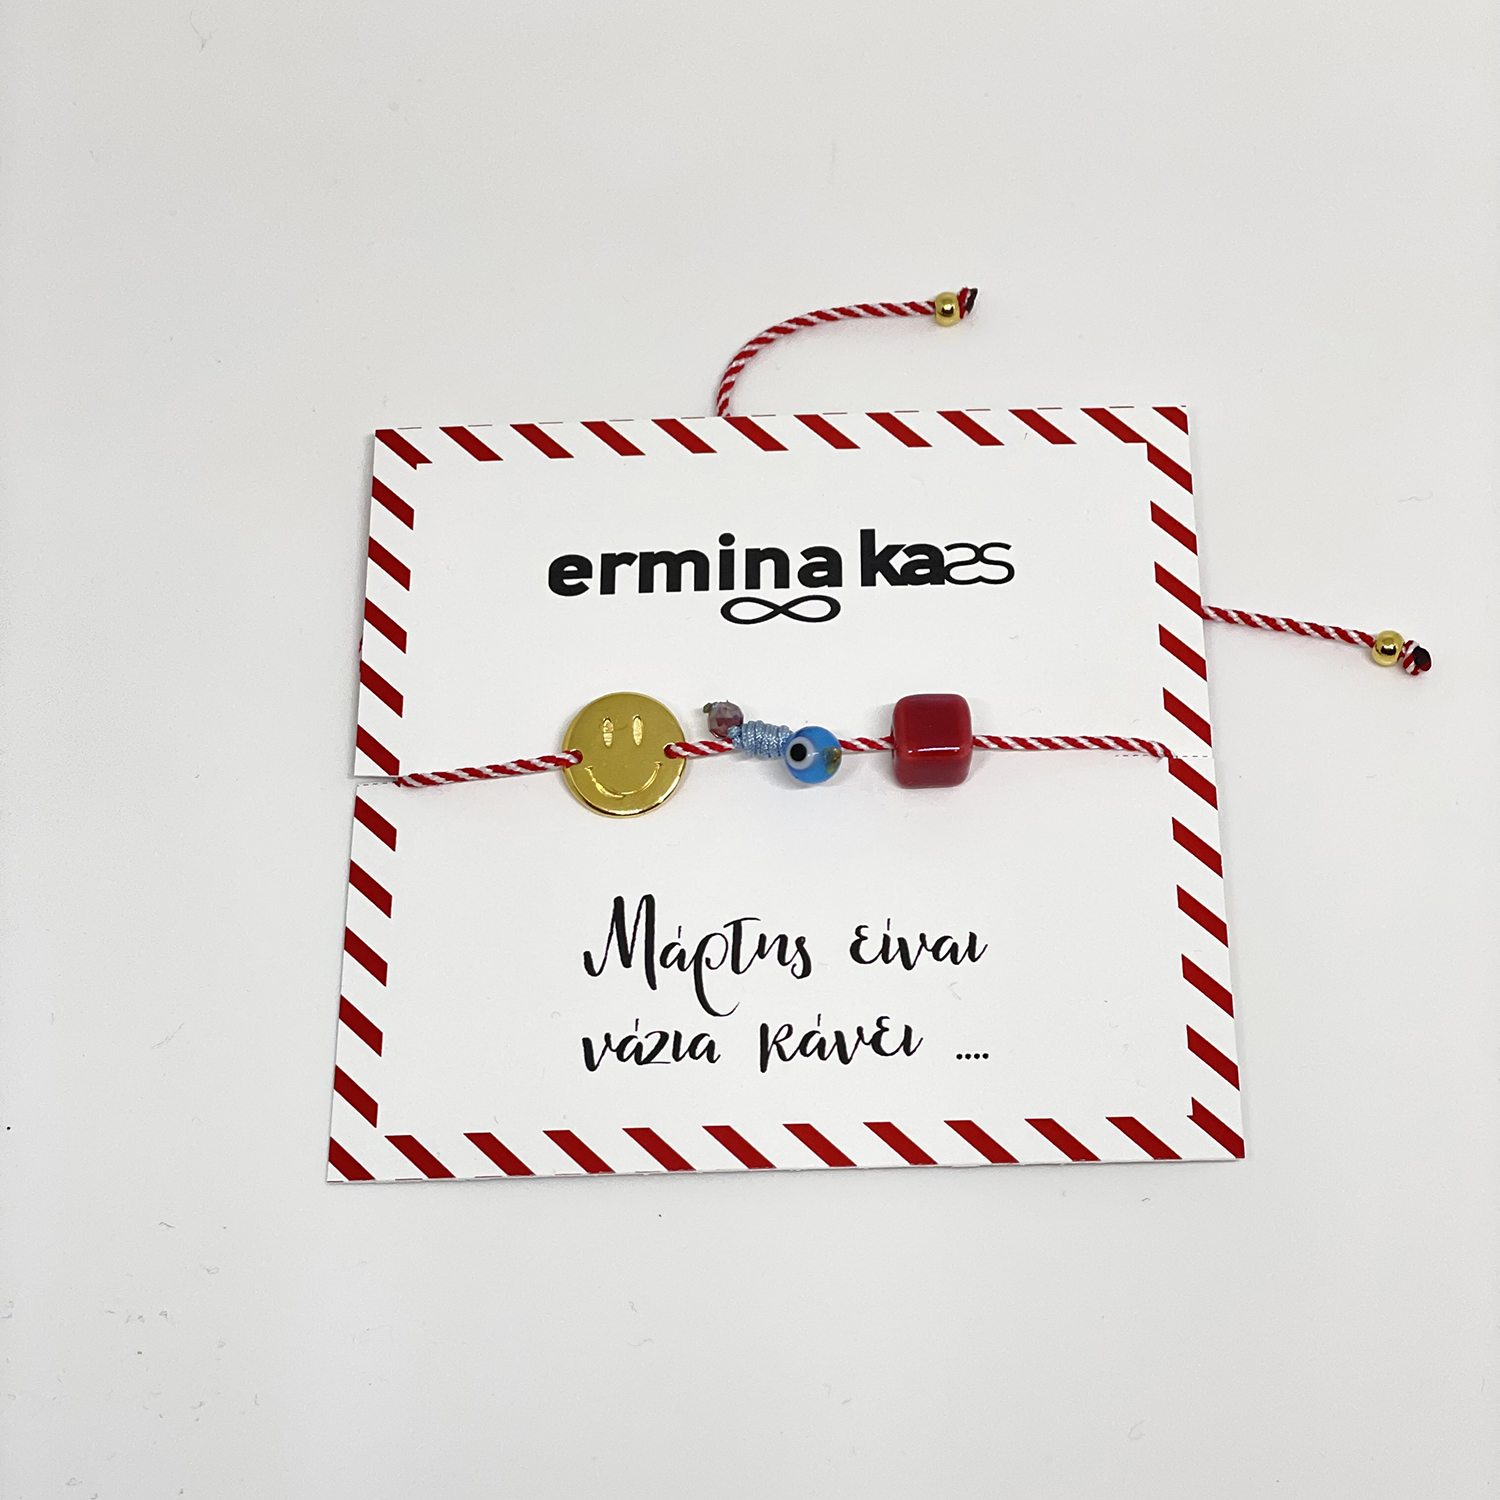 ERMINA KASS – Γυναικείο βραχιόλι μαρτάκι ERMINA KASS SMILE FACE CUBE RED